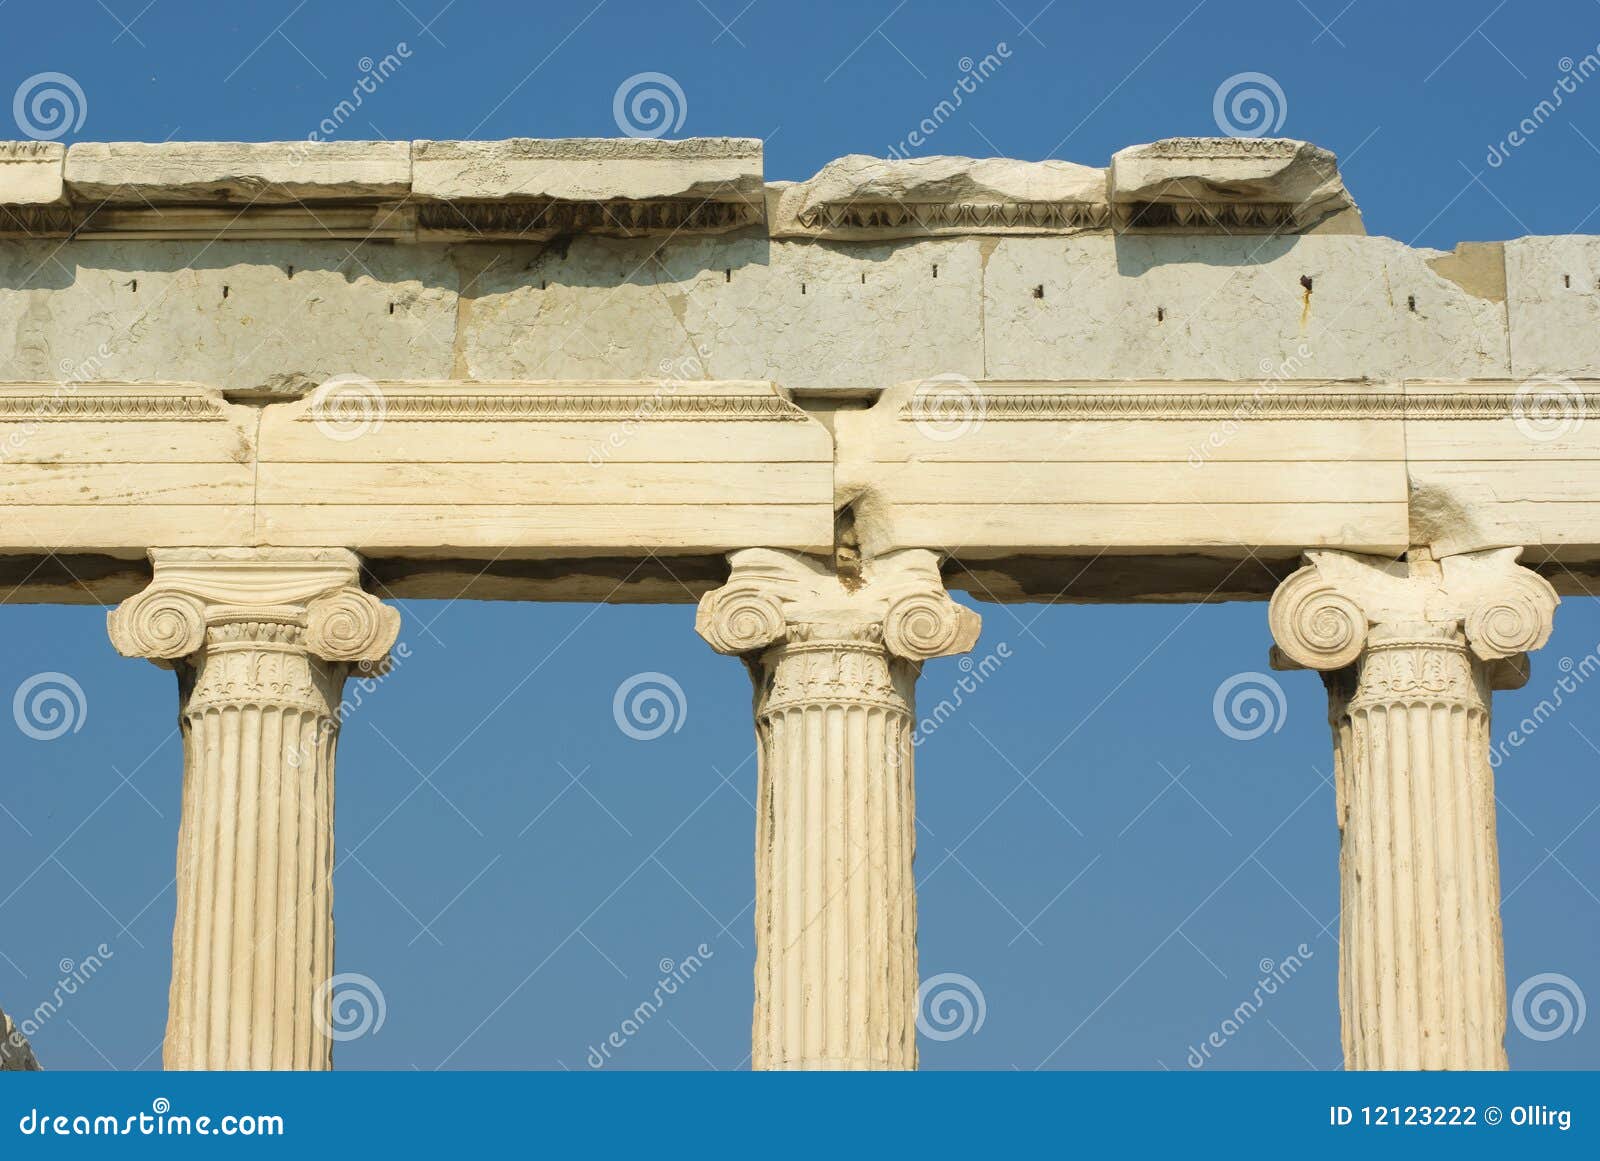 capitals greek on acropolis